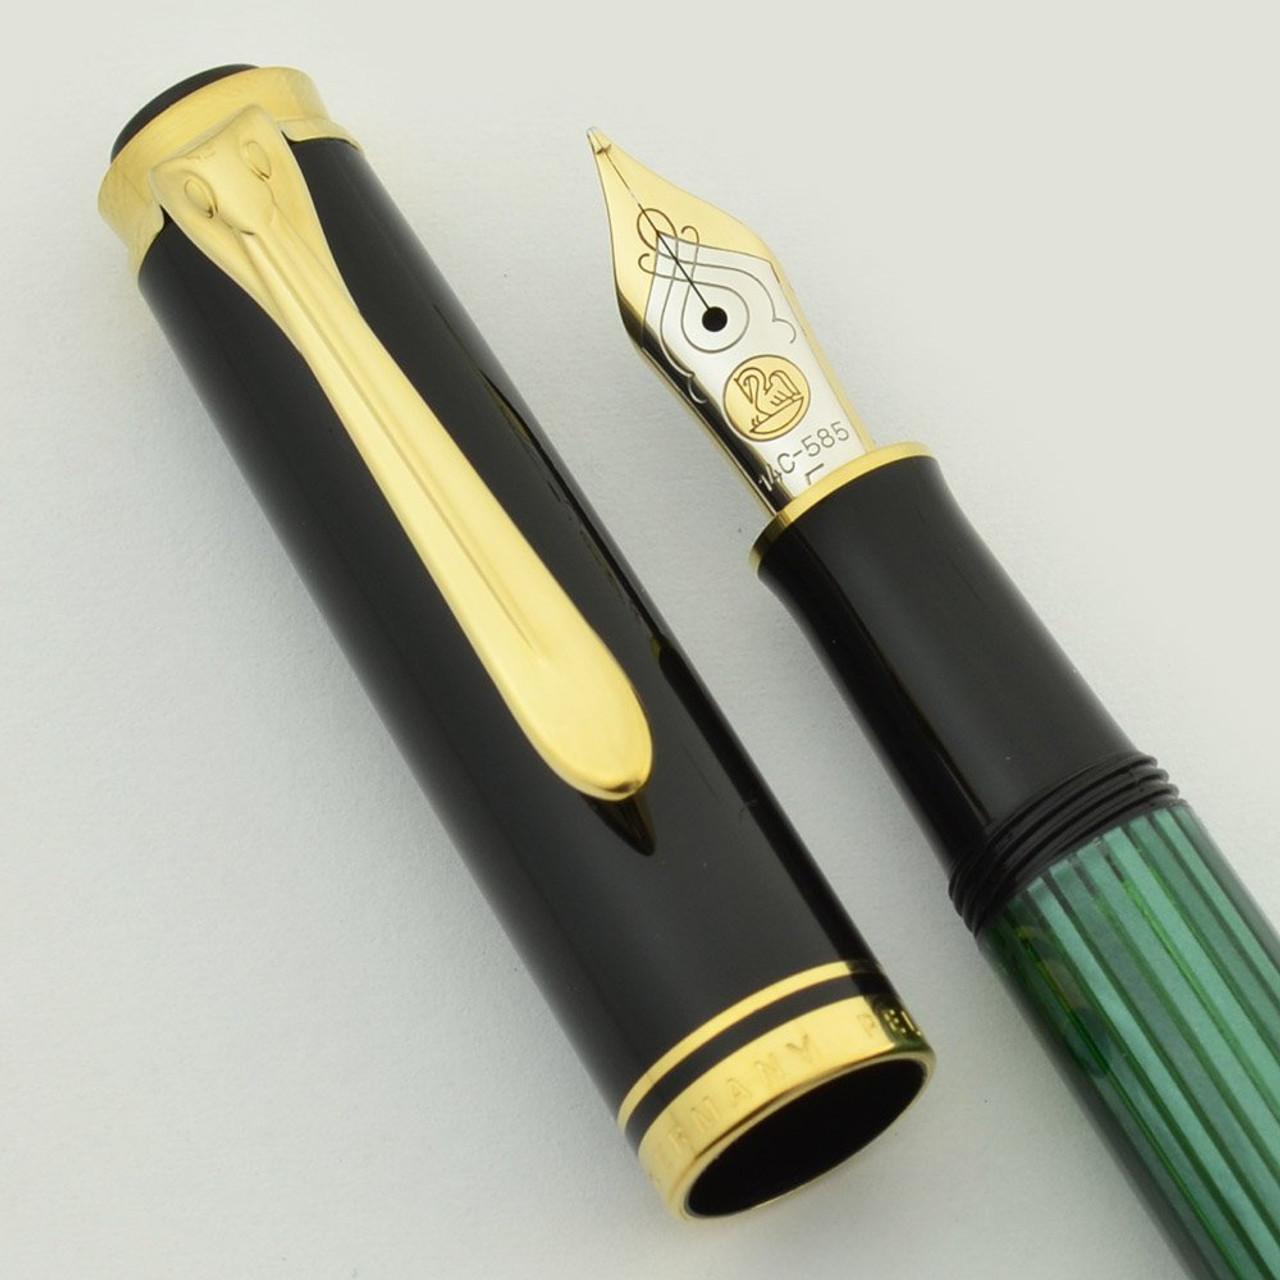 Pelikan M300 Souveran Fountain Pen - Black with Green Barrel, Small, Fine Nib (Near Mint, Works Well) - Peyton Pens